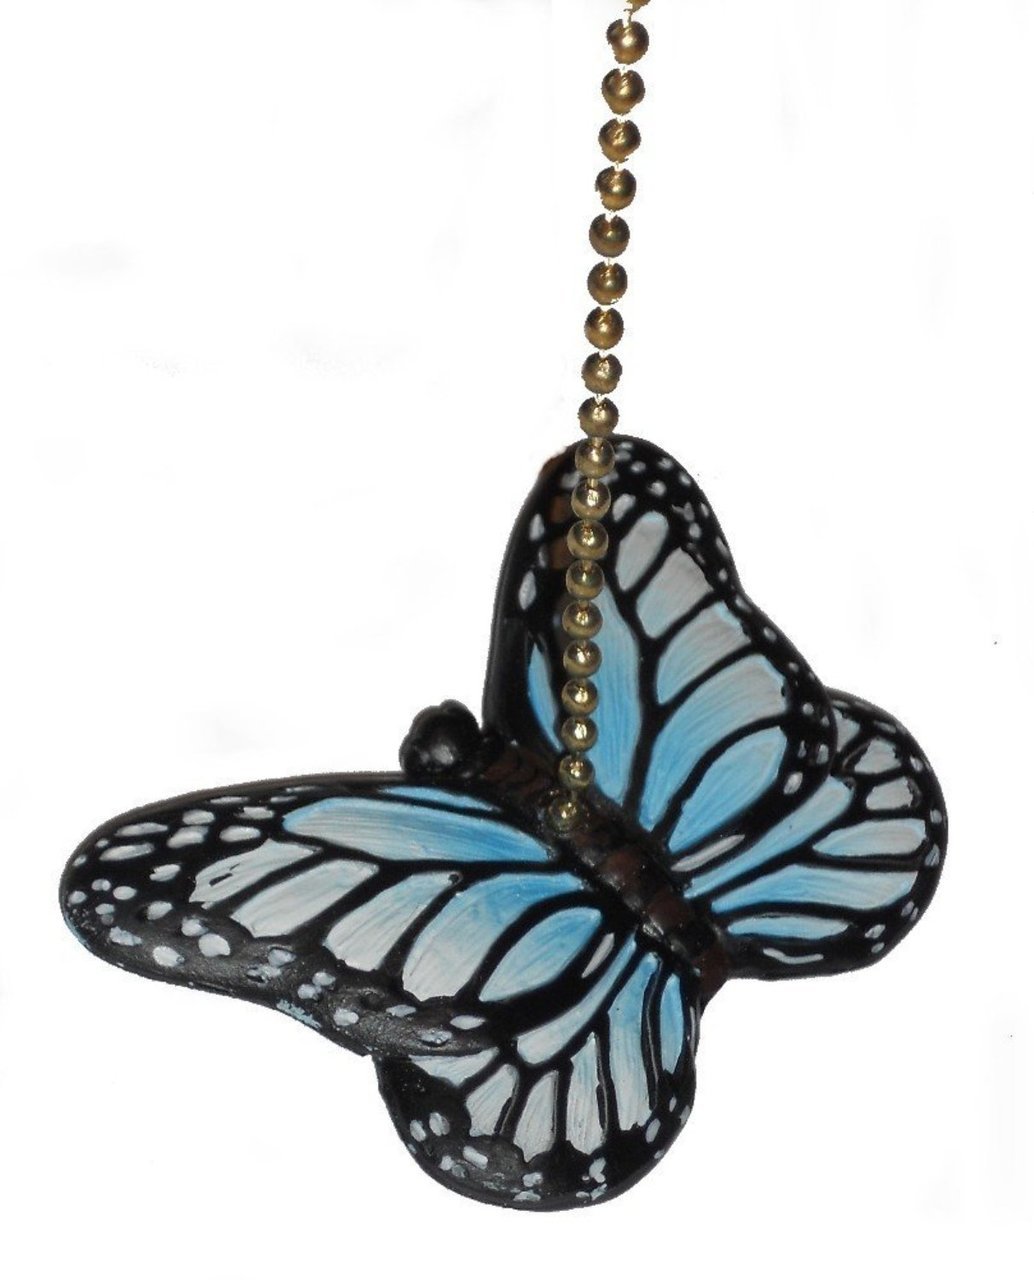 Blue Monarch Butterfly Ceiling Fan Pull or Light Pull Chain